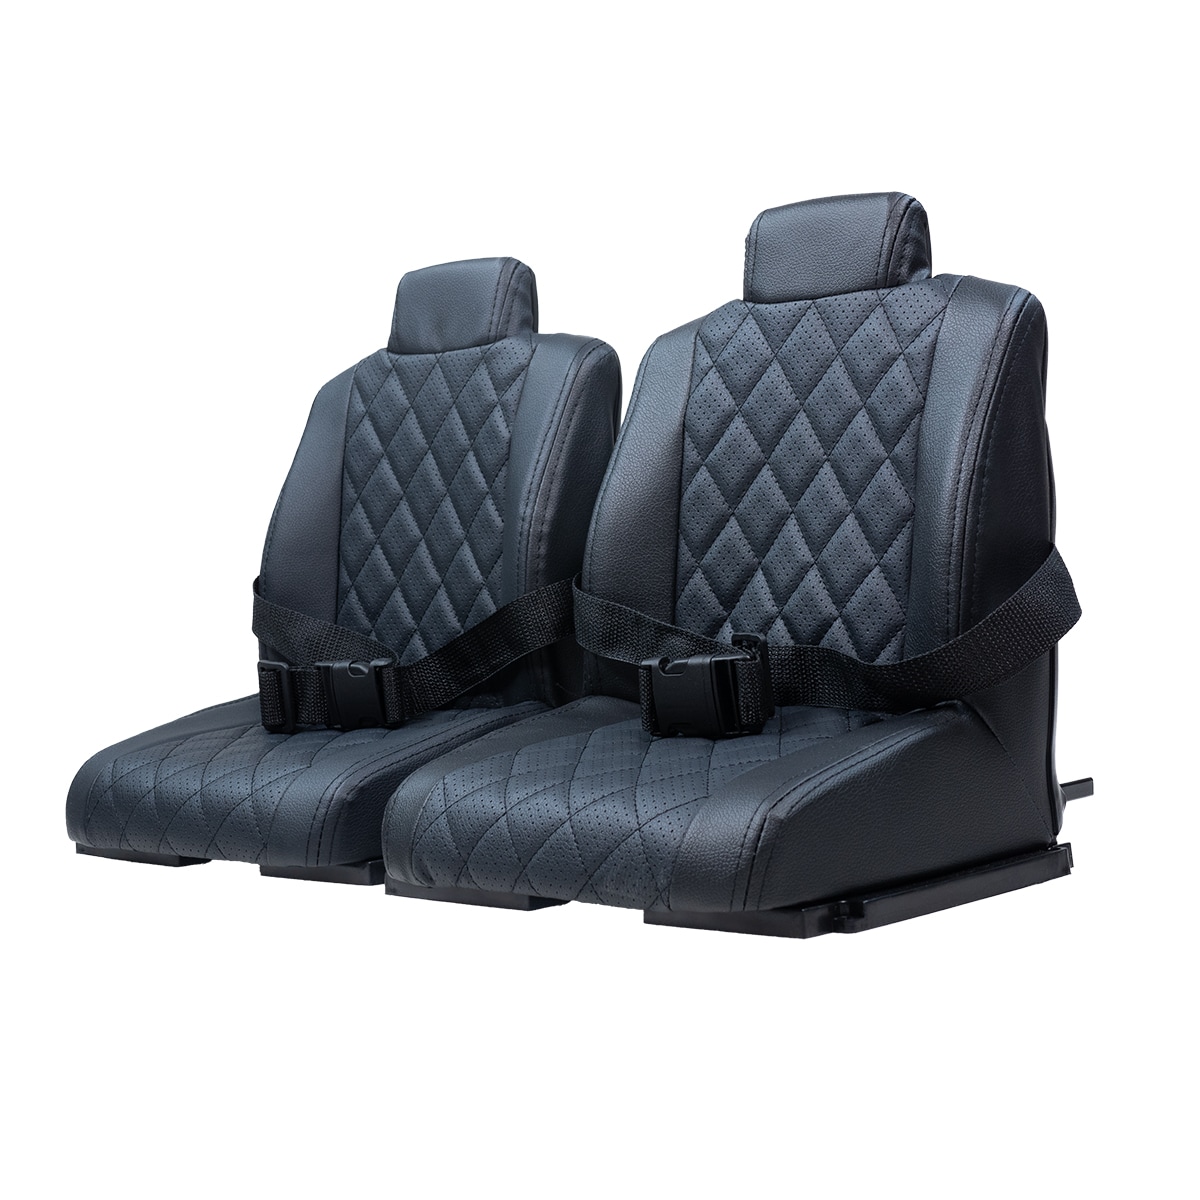 Mercedes Benz G63 AMG 6x6 - Leather seat set